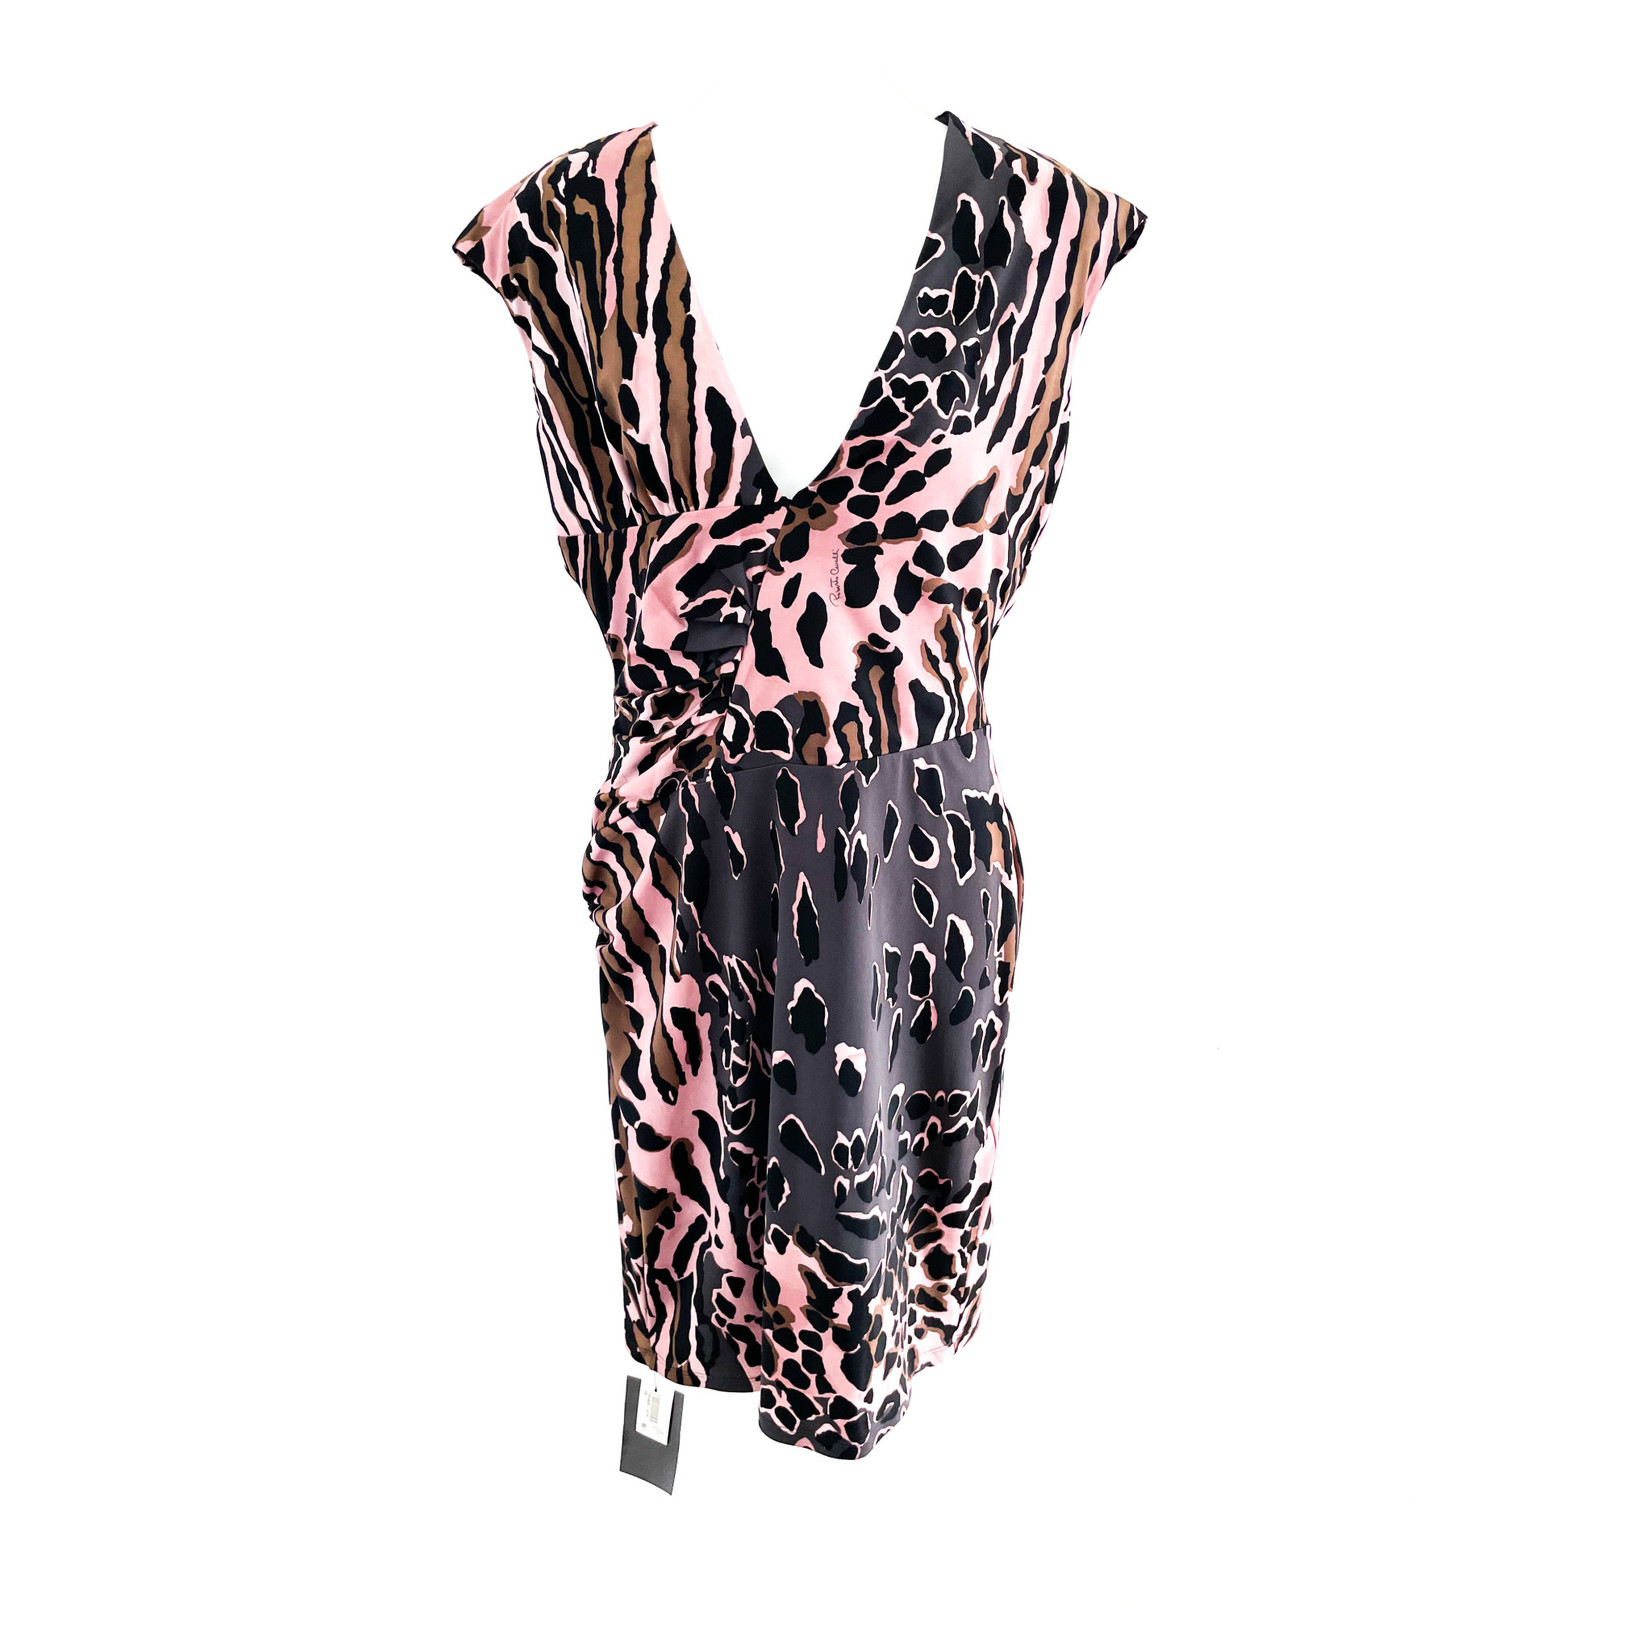 Roberto Cavalli Roberto Cavalli Animal Print Dress - Size 46/12